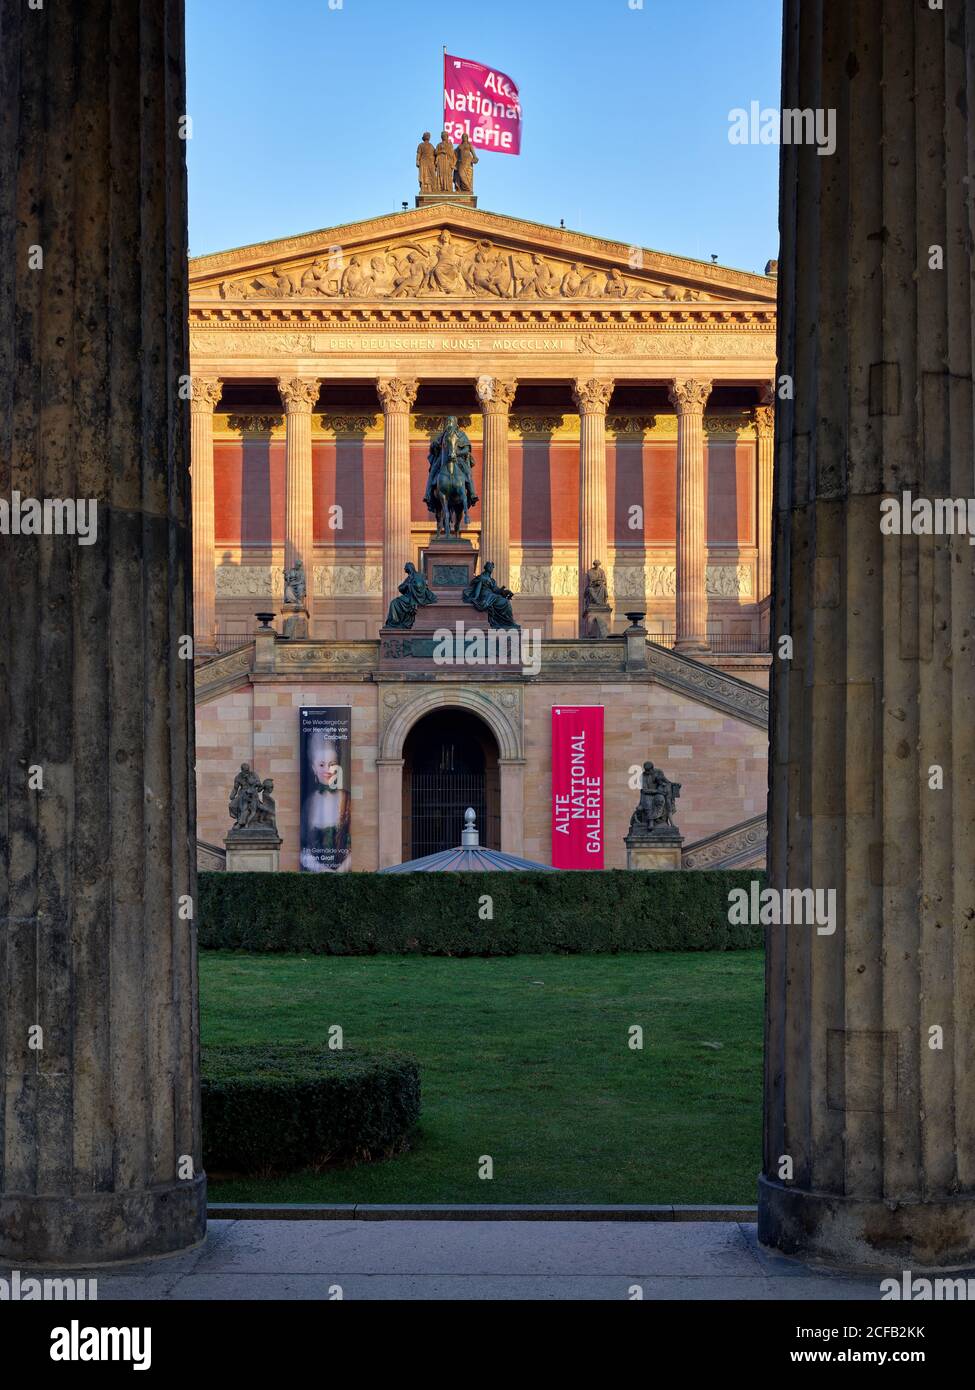 Alte Nationalgalerie, Staatliche Museen in Berlin, Bodestraße, Berlin, Deutschland, Stiftung Preußischer Kulturbesitz, Bodestraße, Preußischer Kulturbesitz Stockfoto